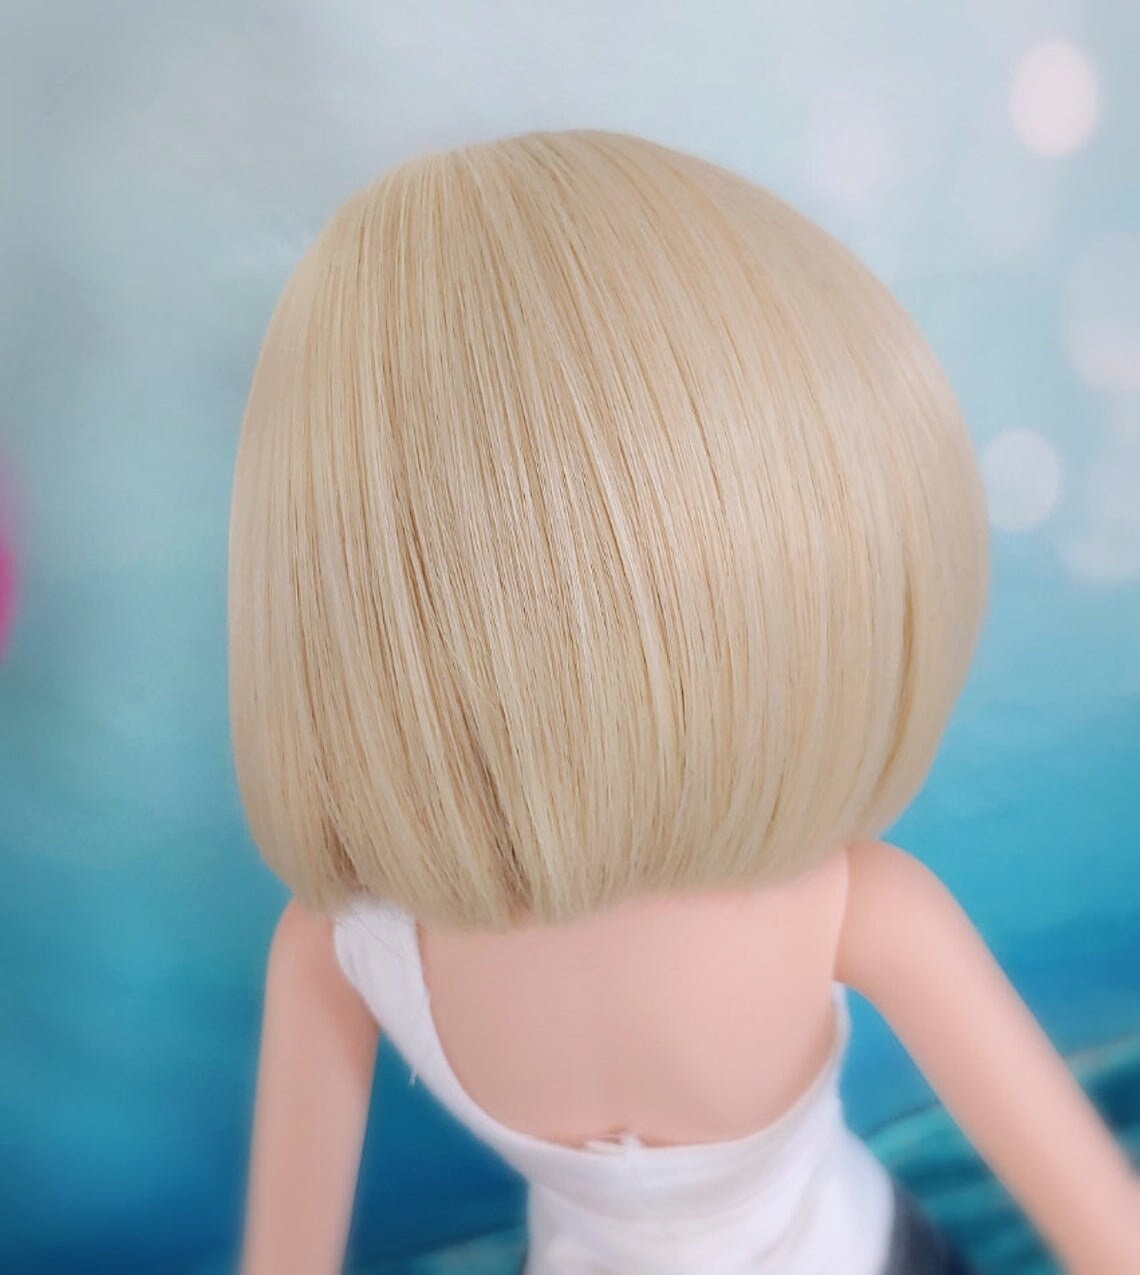 Custom doll Wig for Smart Dolls- Heat Safe - Tangle Resistant- 8.5" head size of Bjd, SD, Dollfie Dream dolls  Blonde Bob